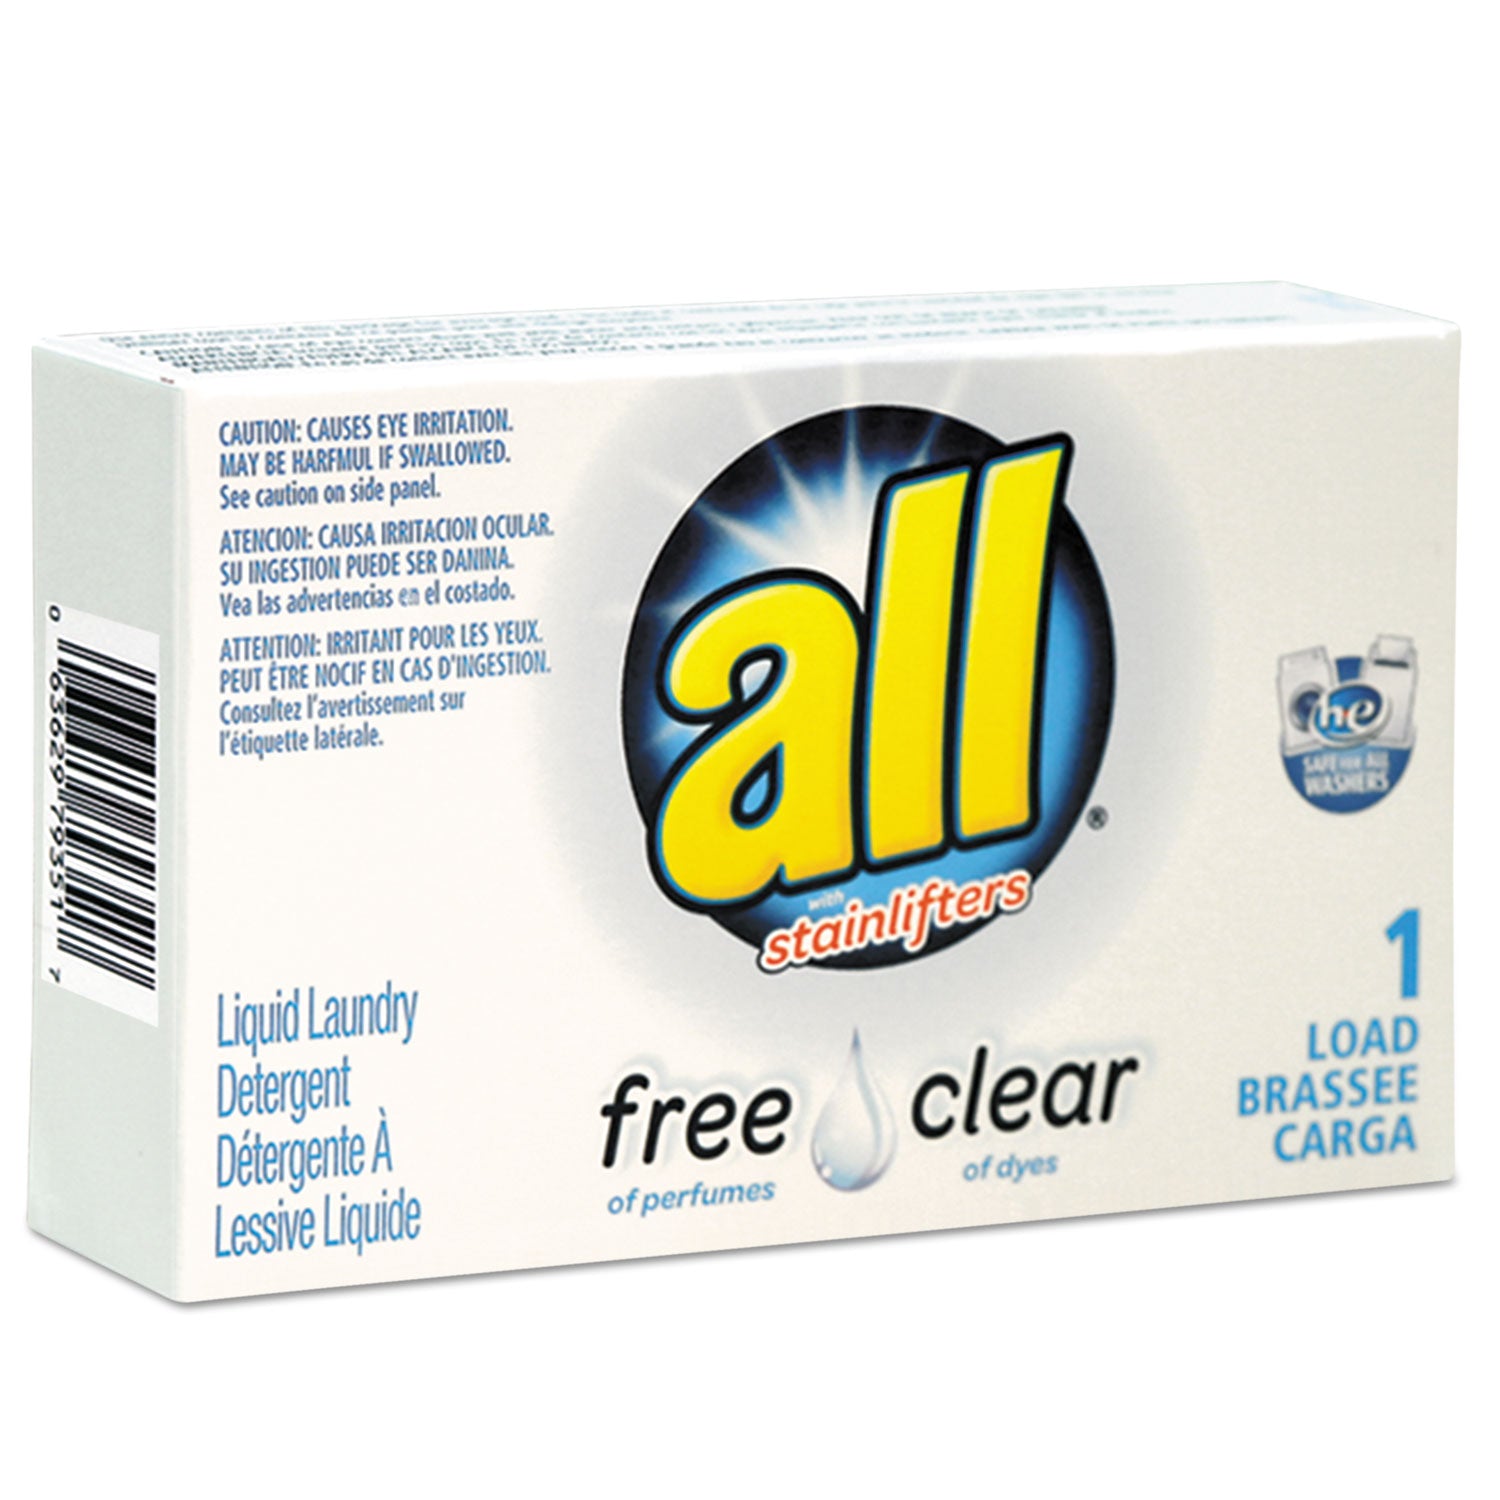 free-clear-he-liquid-laundry-detergent-unscented-16-oz-vend-box-100-carton_ven2979351 - 1